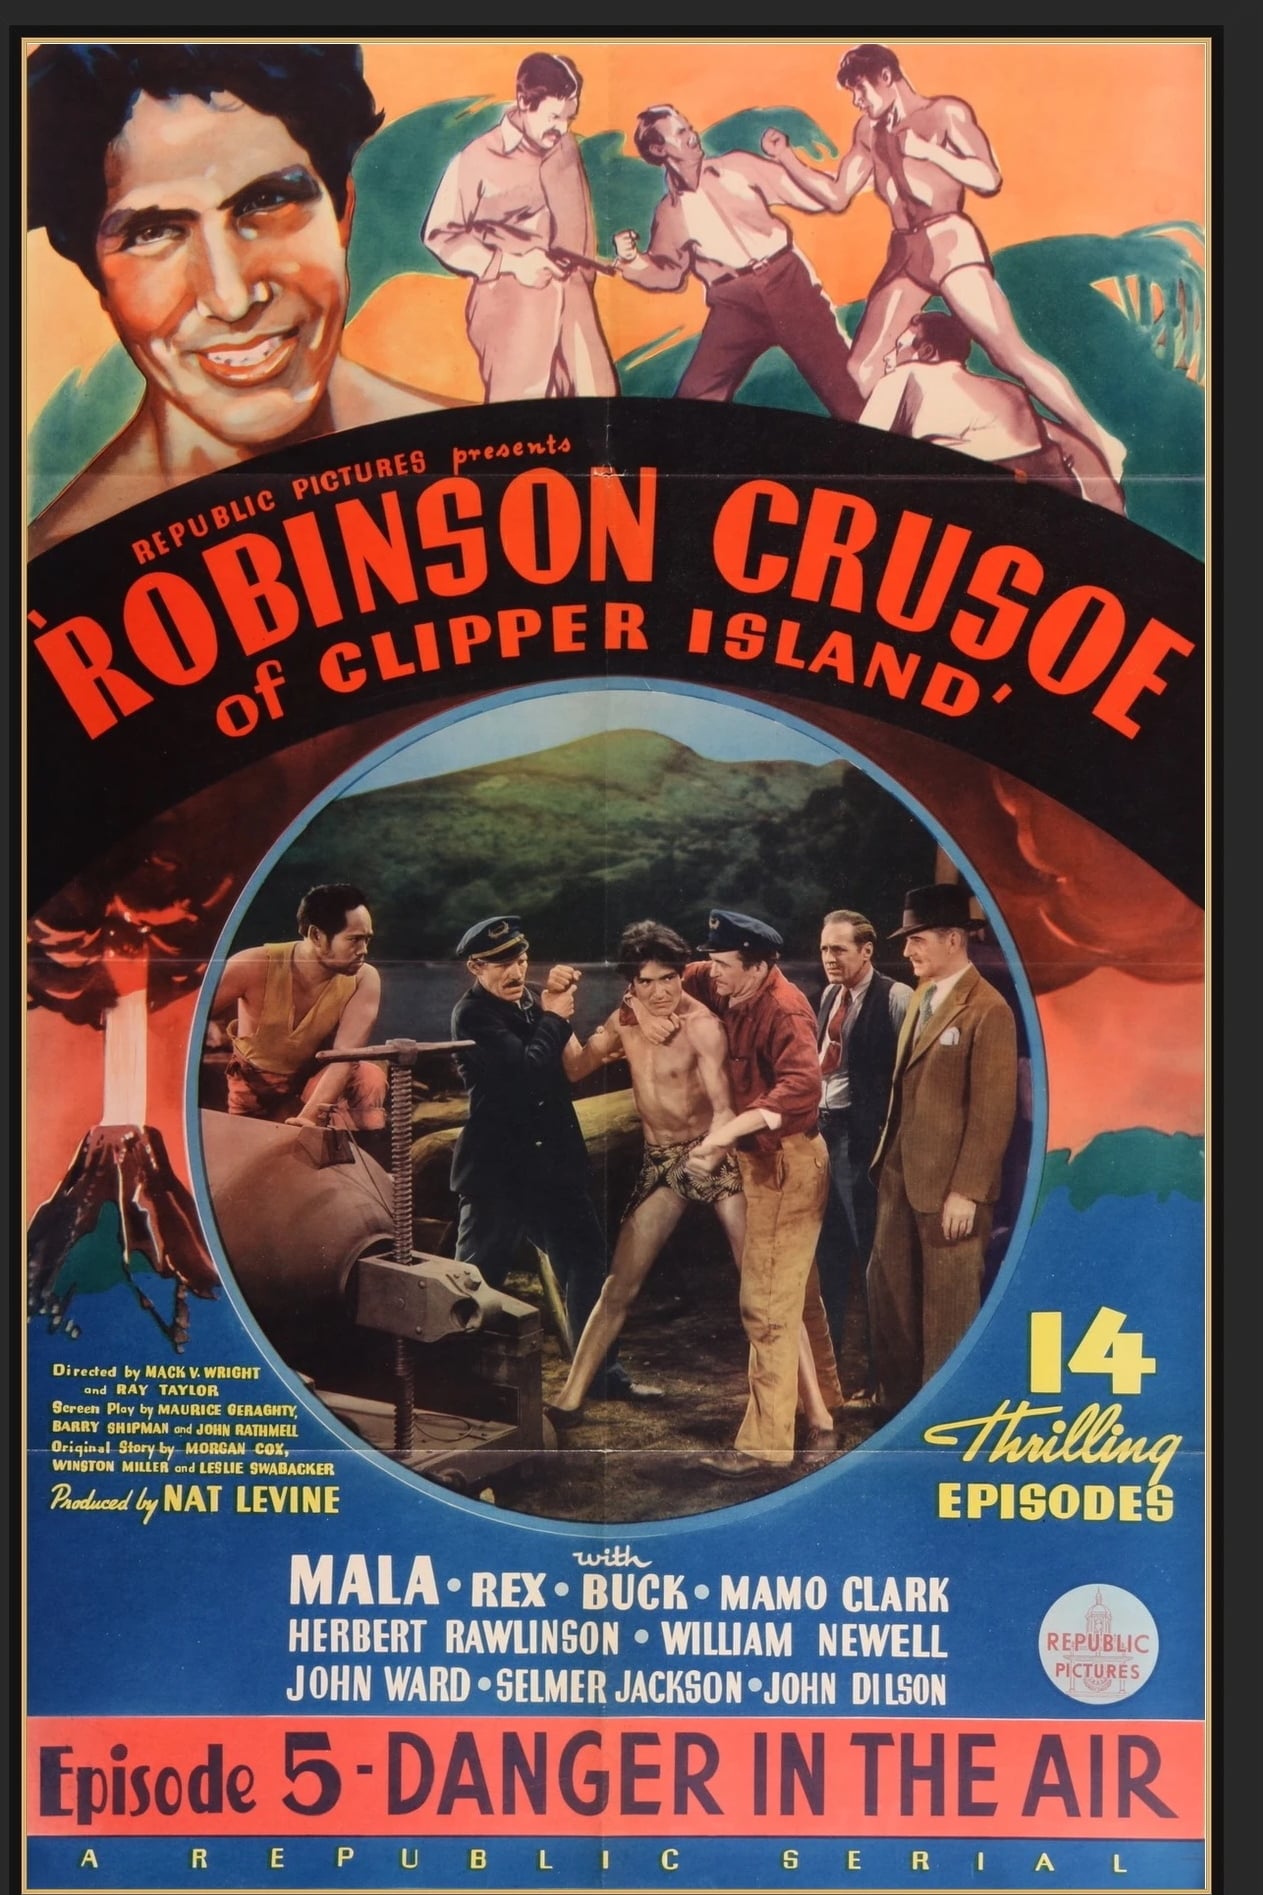 Robinson Crusoe of Clipper Island (1936)